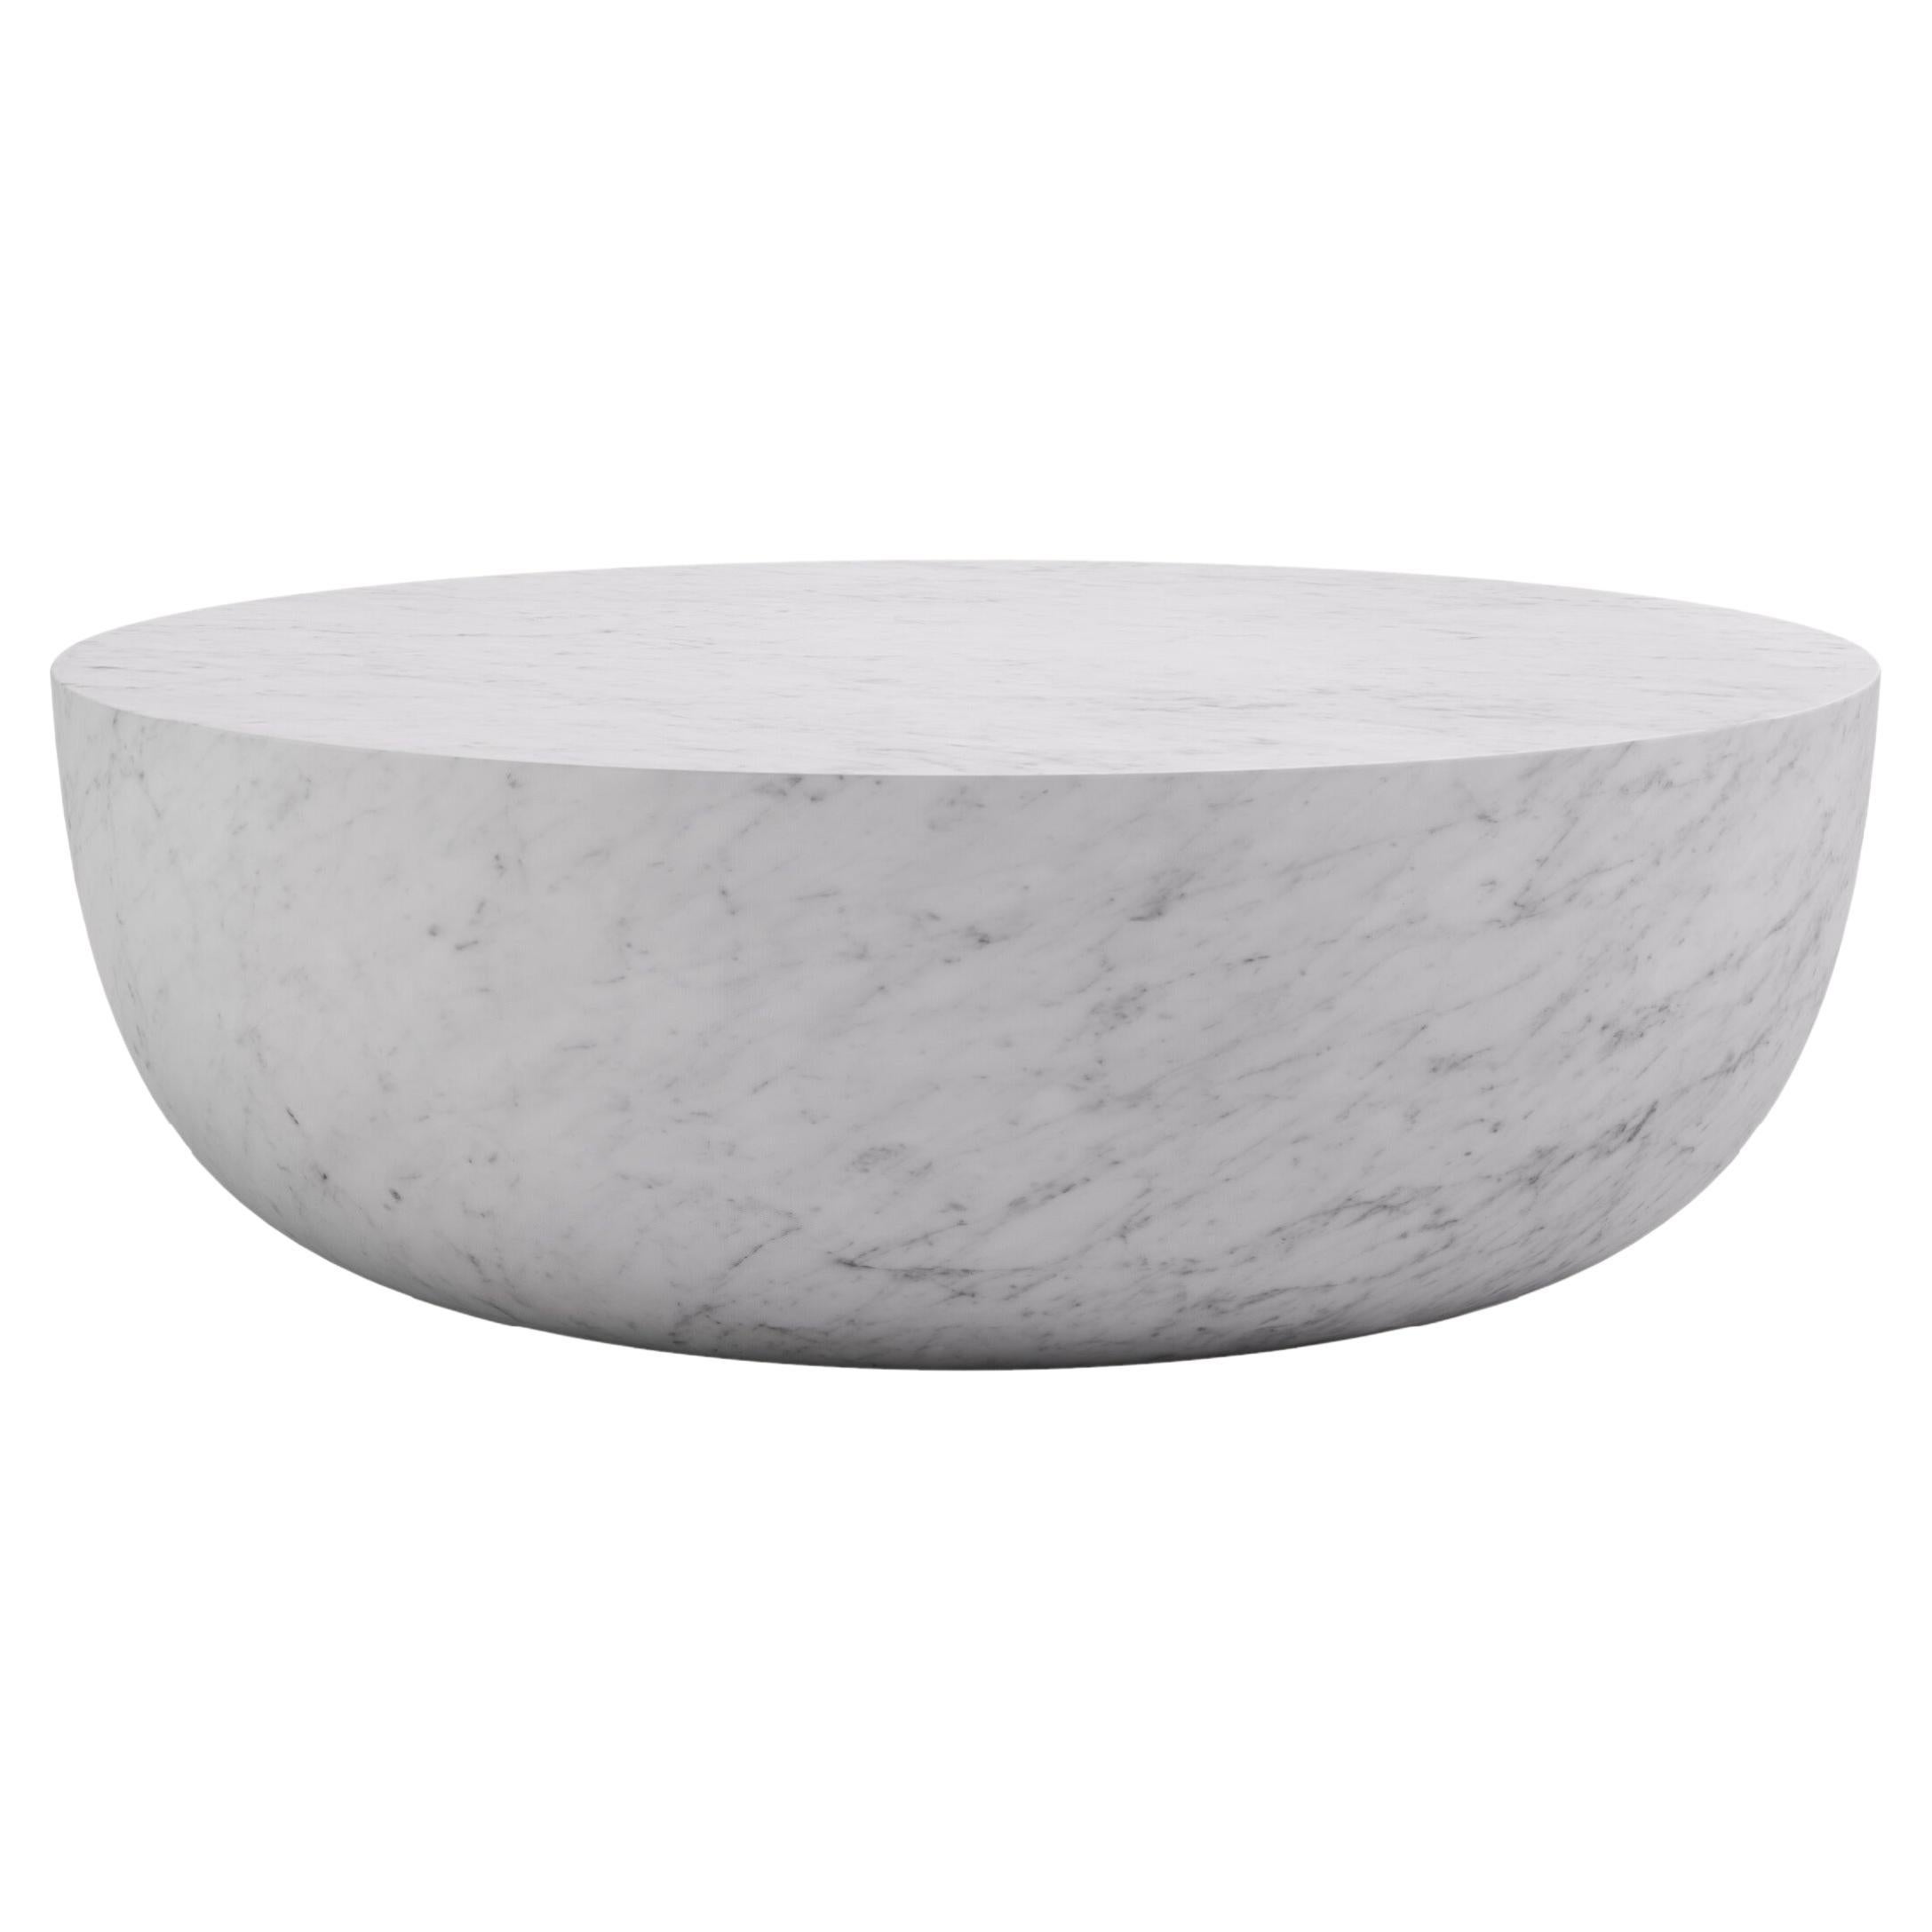 FORM(LA) Sfera Round Coffee Table 36”L x 36”W x 16”H Carrara Bianco Marble For Sale